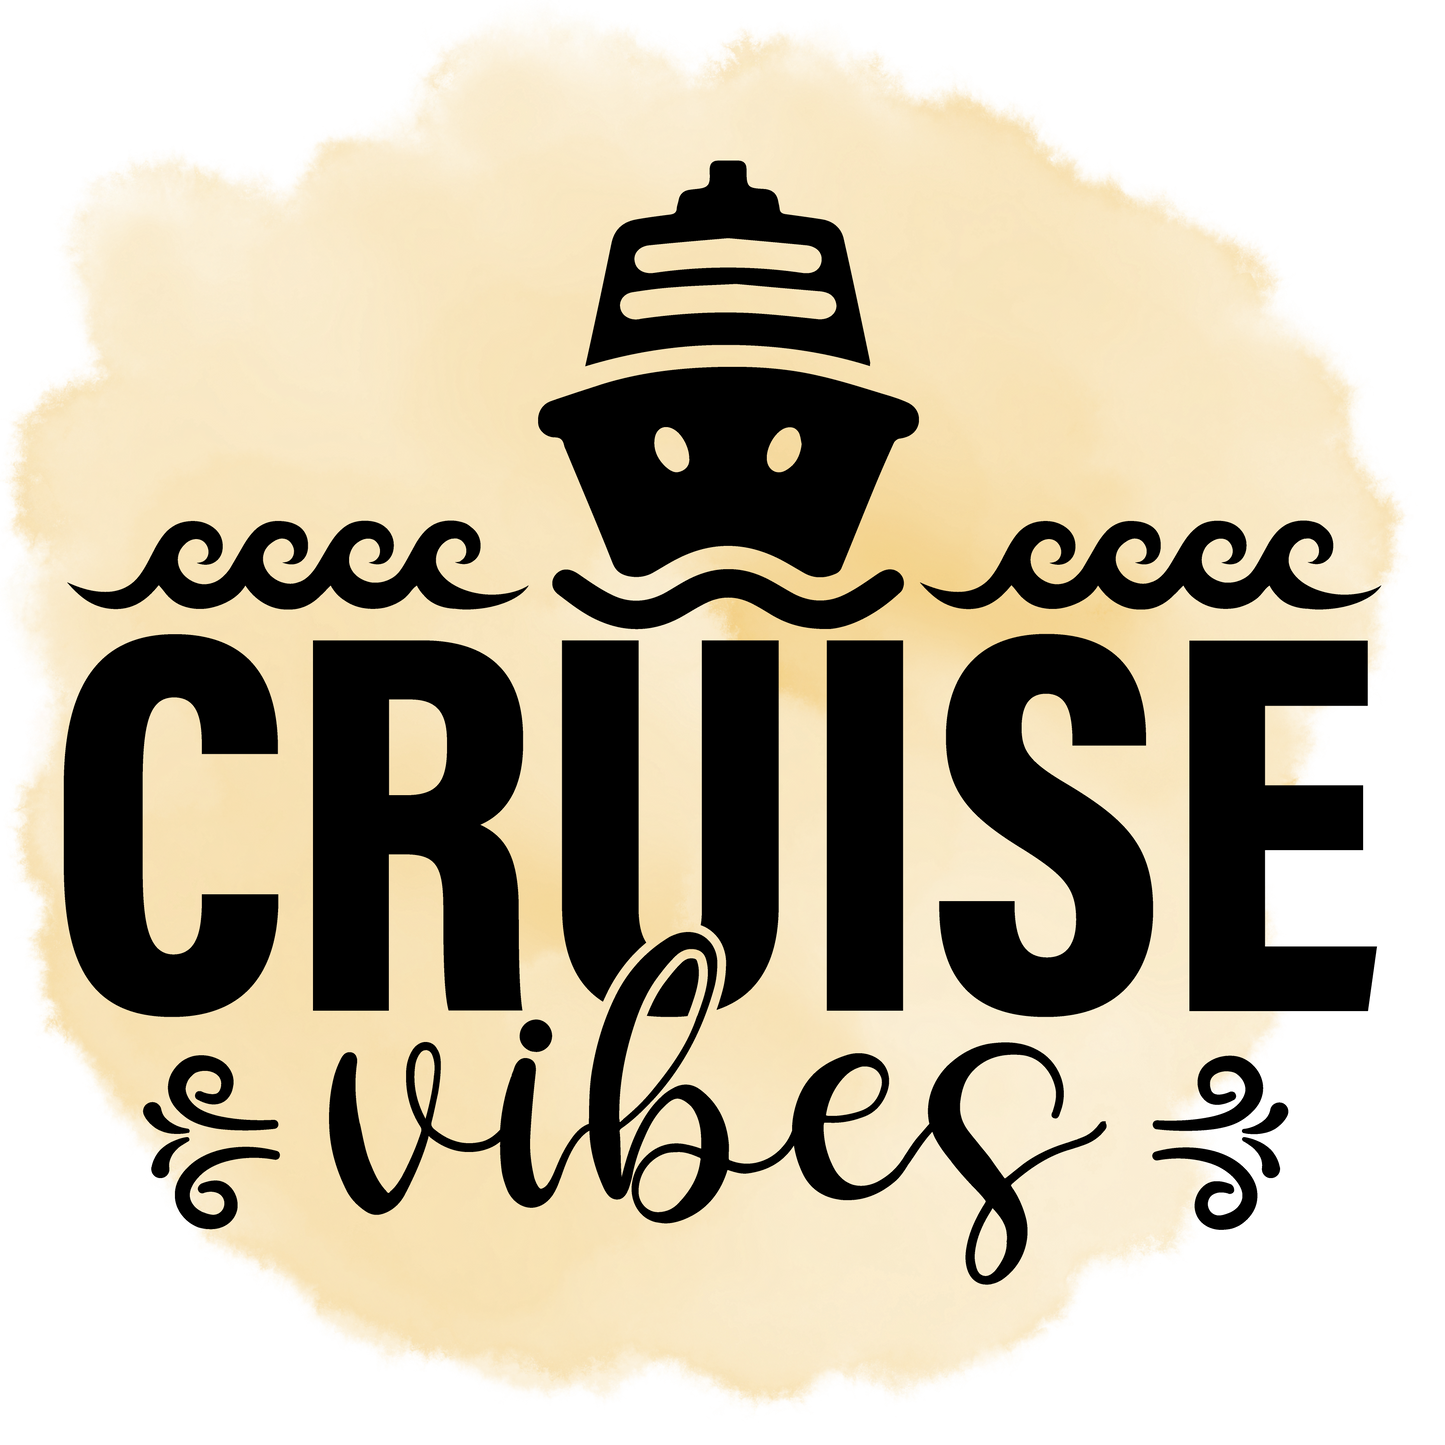 Cruise Vibes